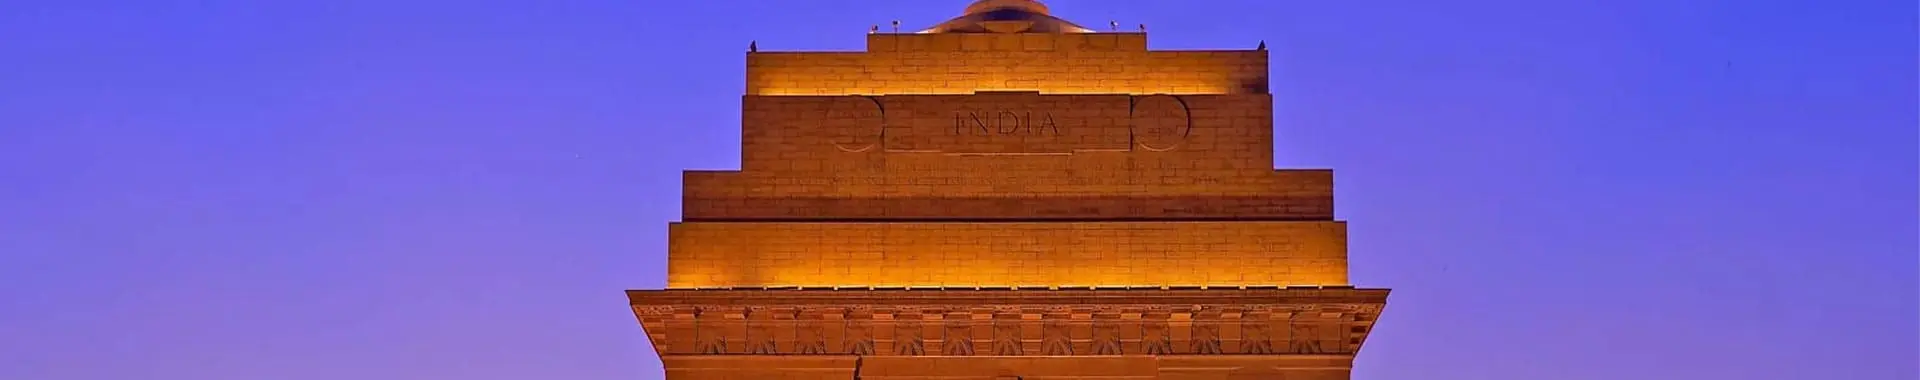 Delhi Banner